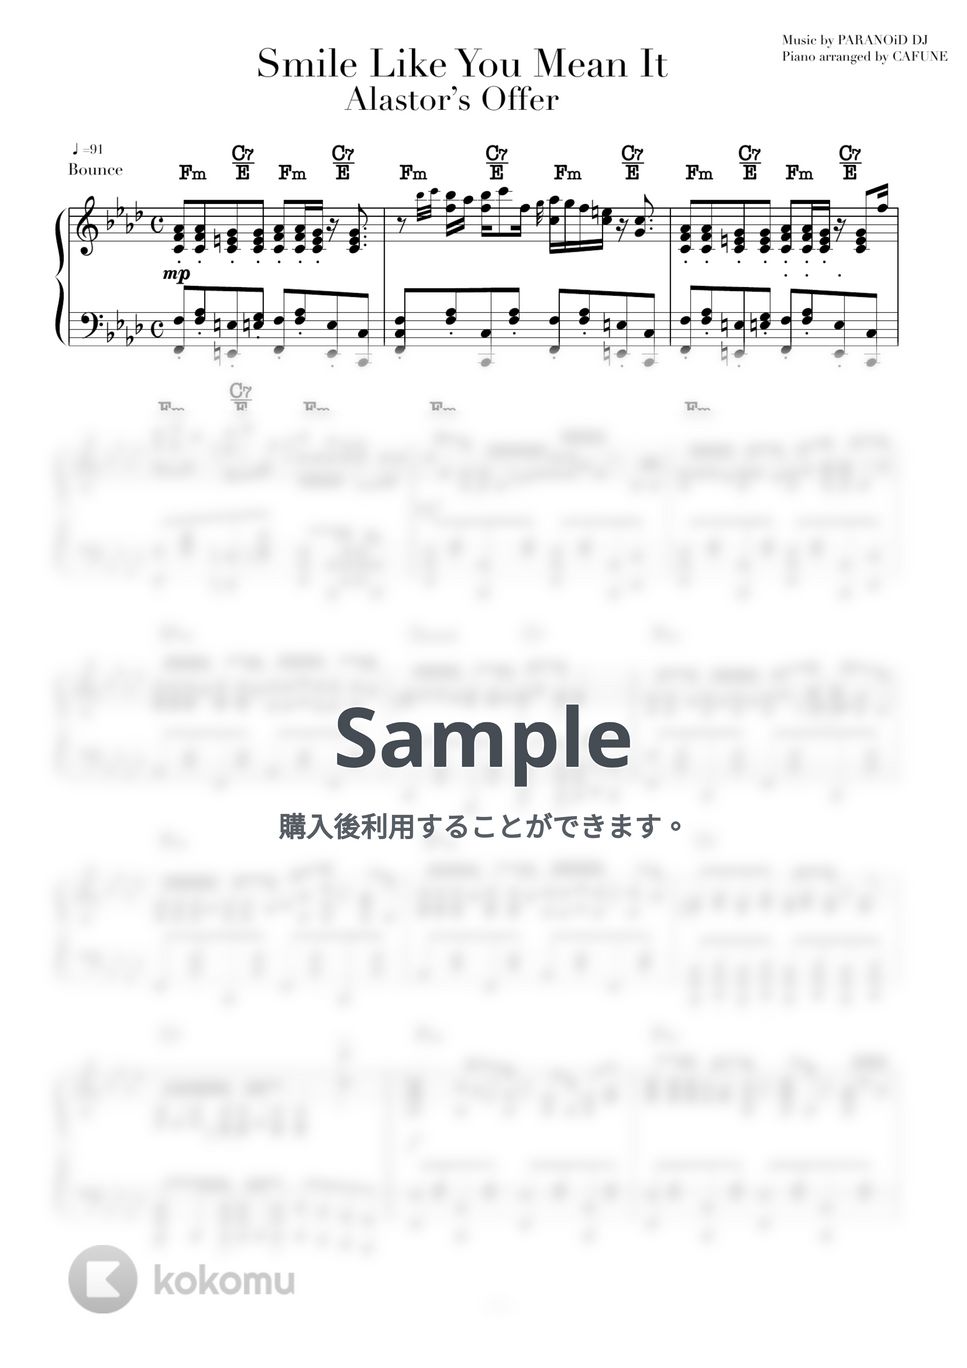 PARANOiD DJ - Smile like You Mean It(Alastor’s Offer) (ピアノソロ/コード有/ハズビンホテル) by CAFUNE-かふね-